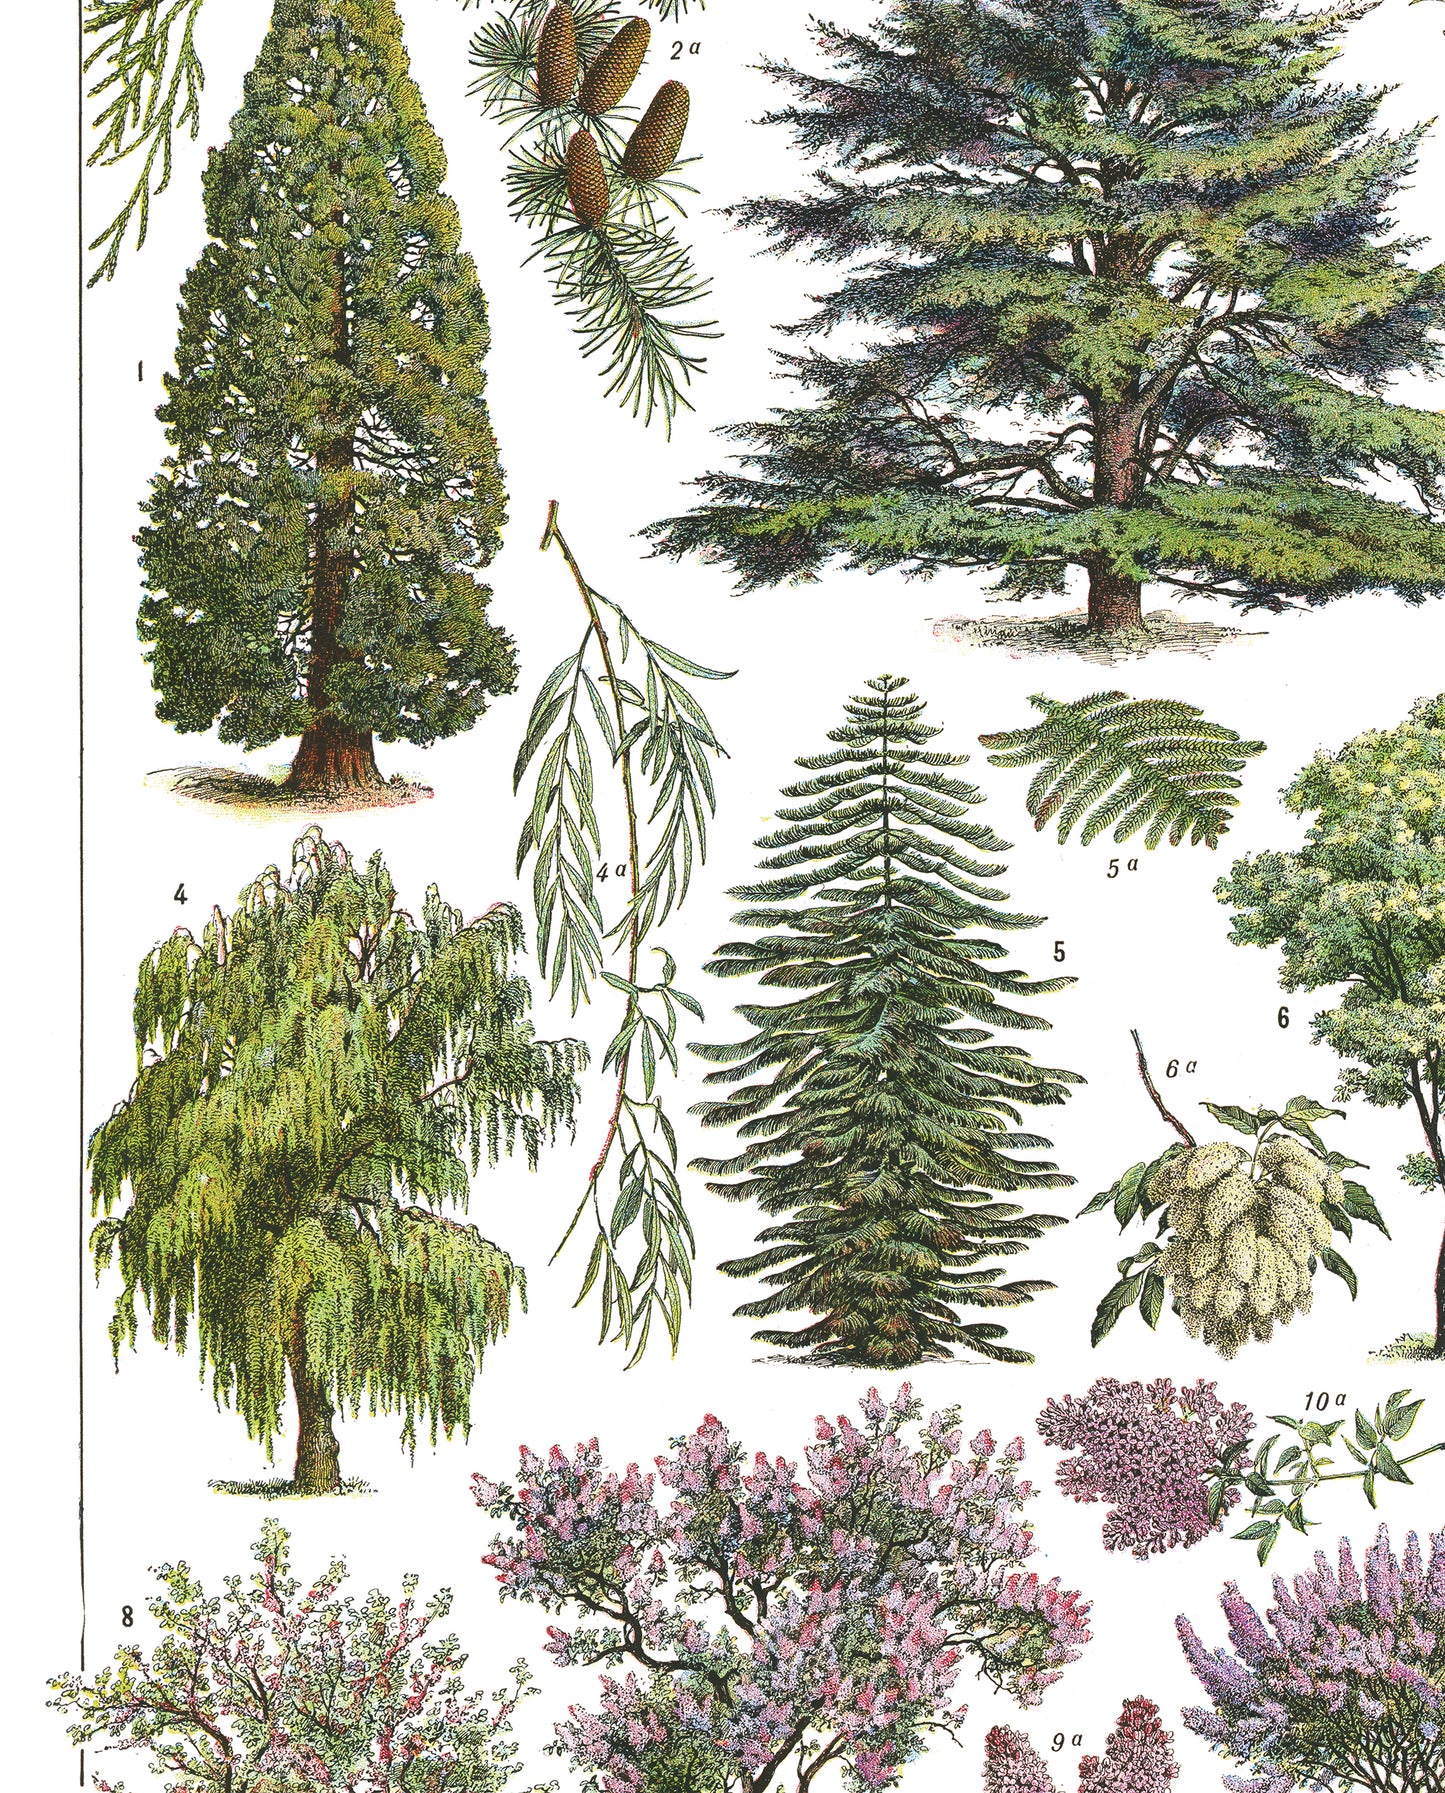 details of  large ornamental garden trees botanical poster showing close-up